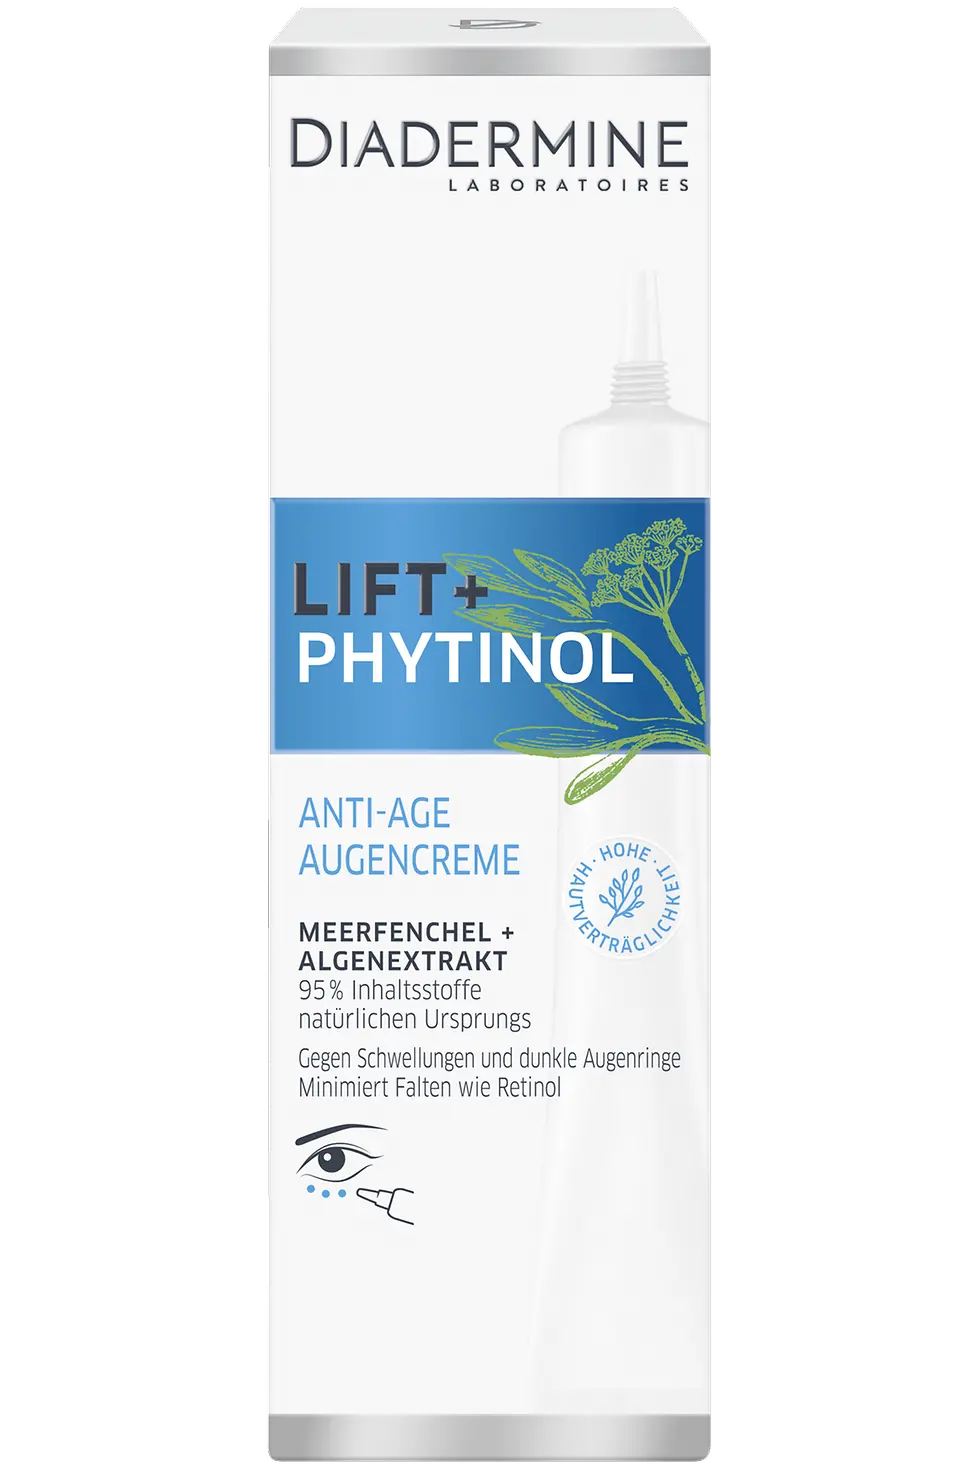 Diadermine Lift+ Phytinol Anti-Age Augencreme